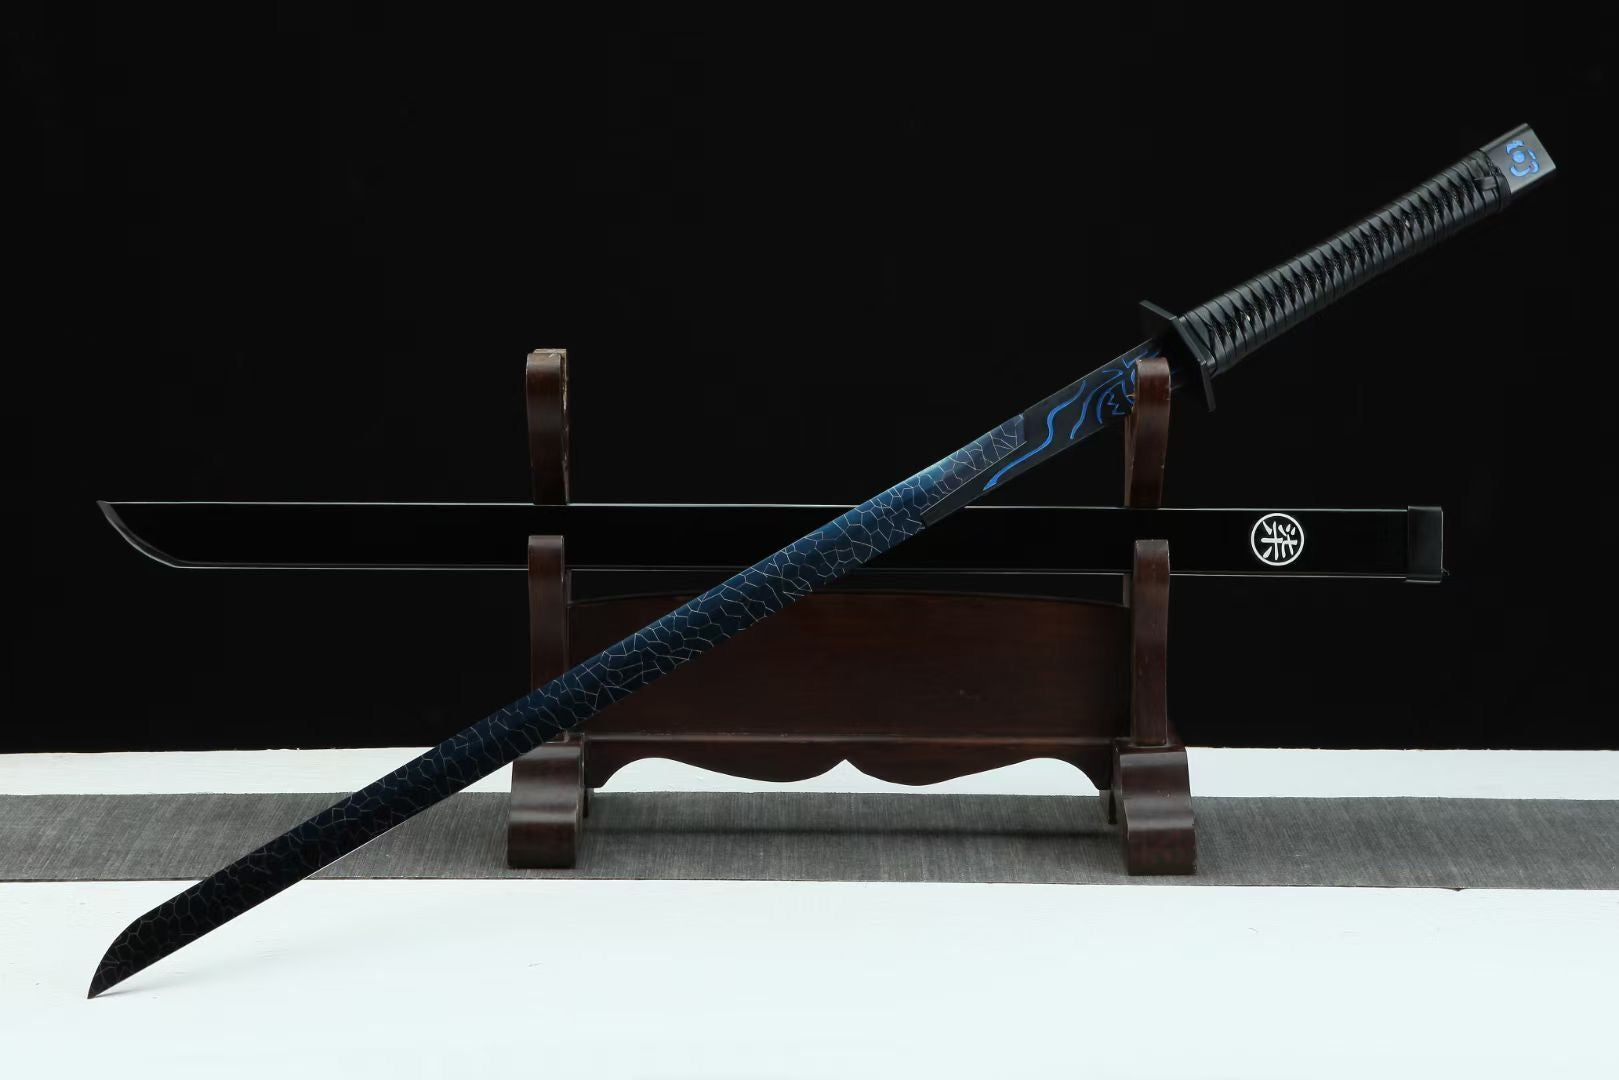 Magic Blade,Roasted Blue Blade,Thousand shard demon dagger,Handmade Chinese Sword,Tang-Horizontal Sword, High performance manganese steel, Longquan sword